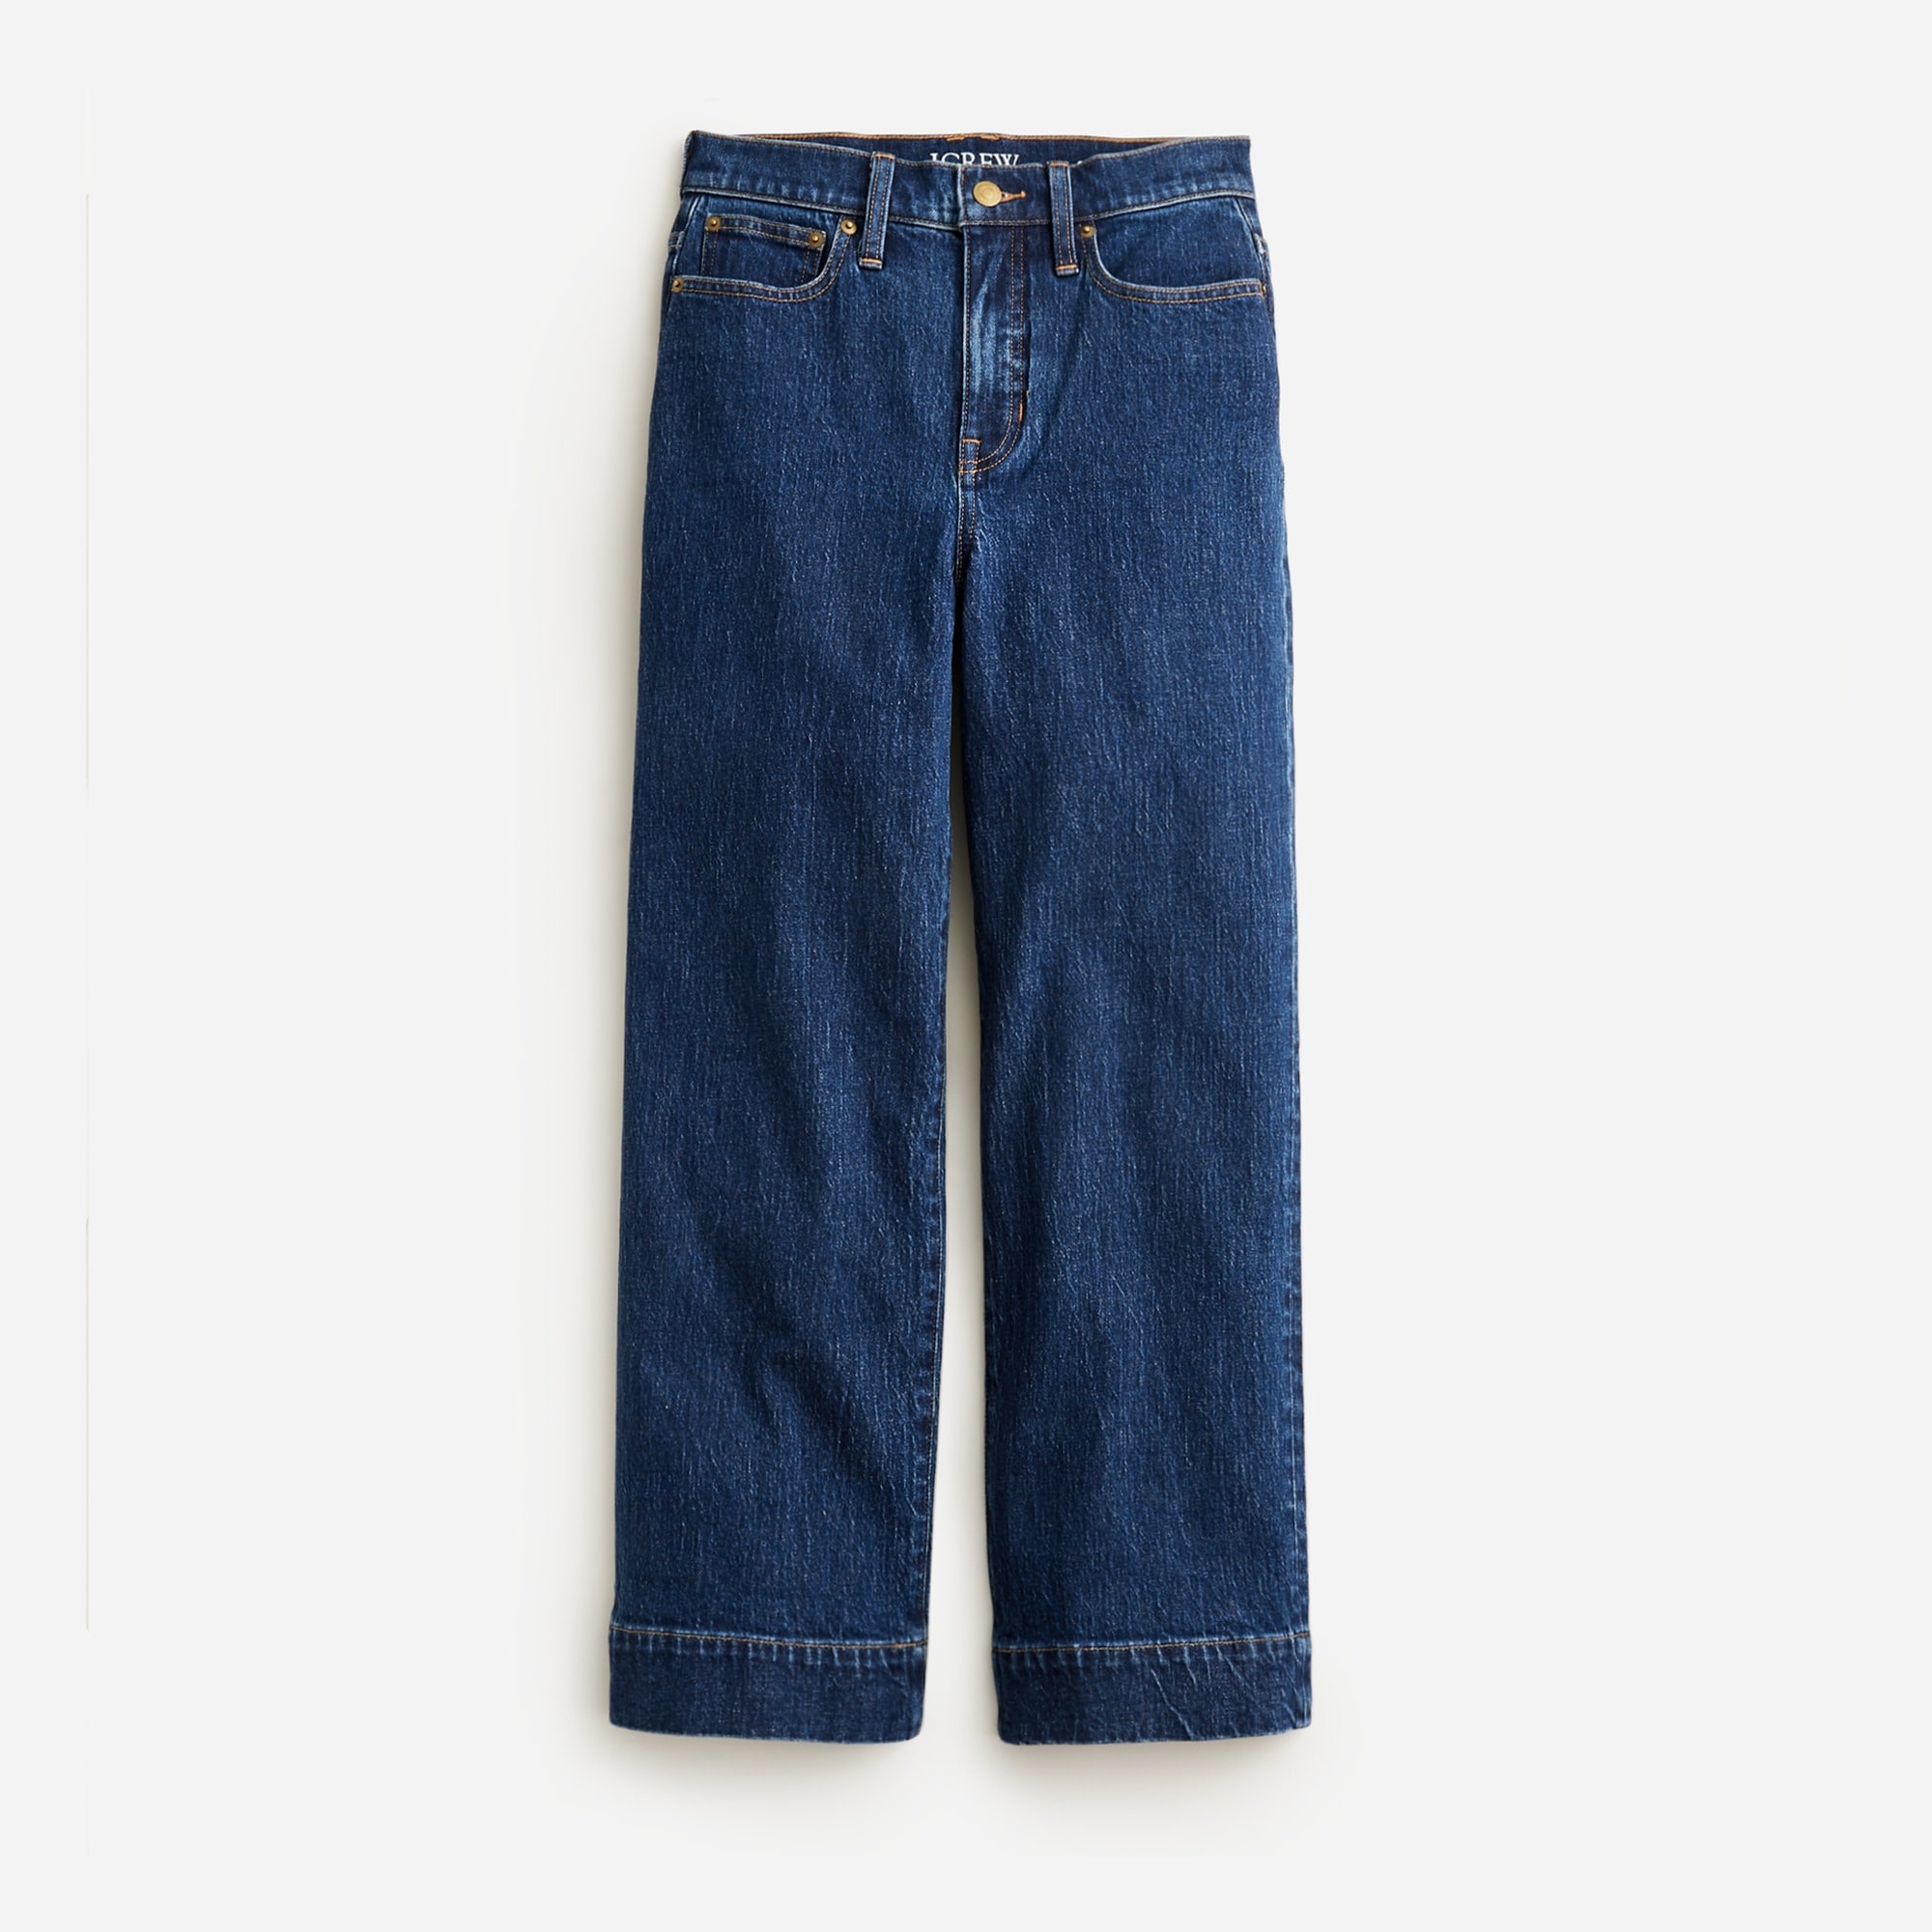  Tall slim wide-leg jean in Brick Lane wash